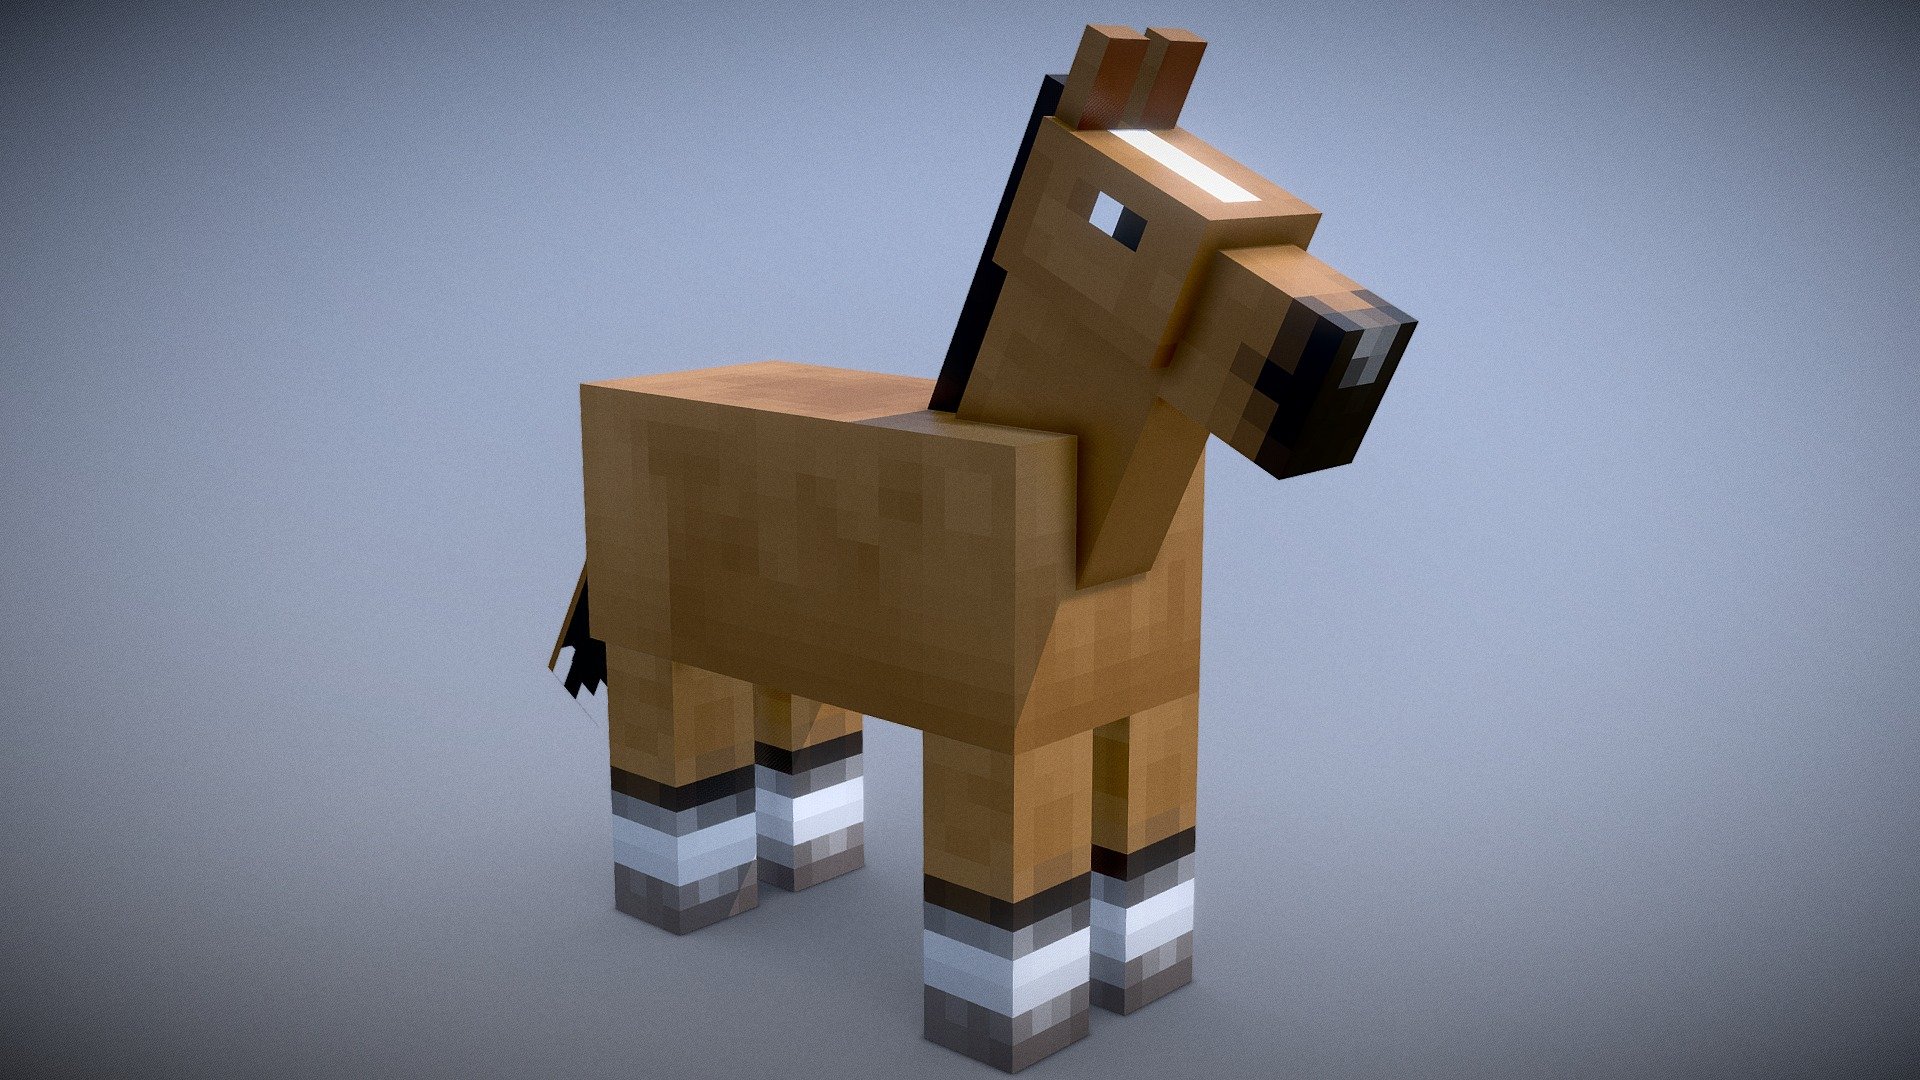 Minecraft Horses